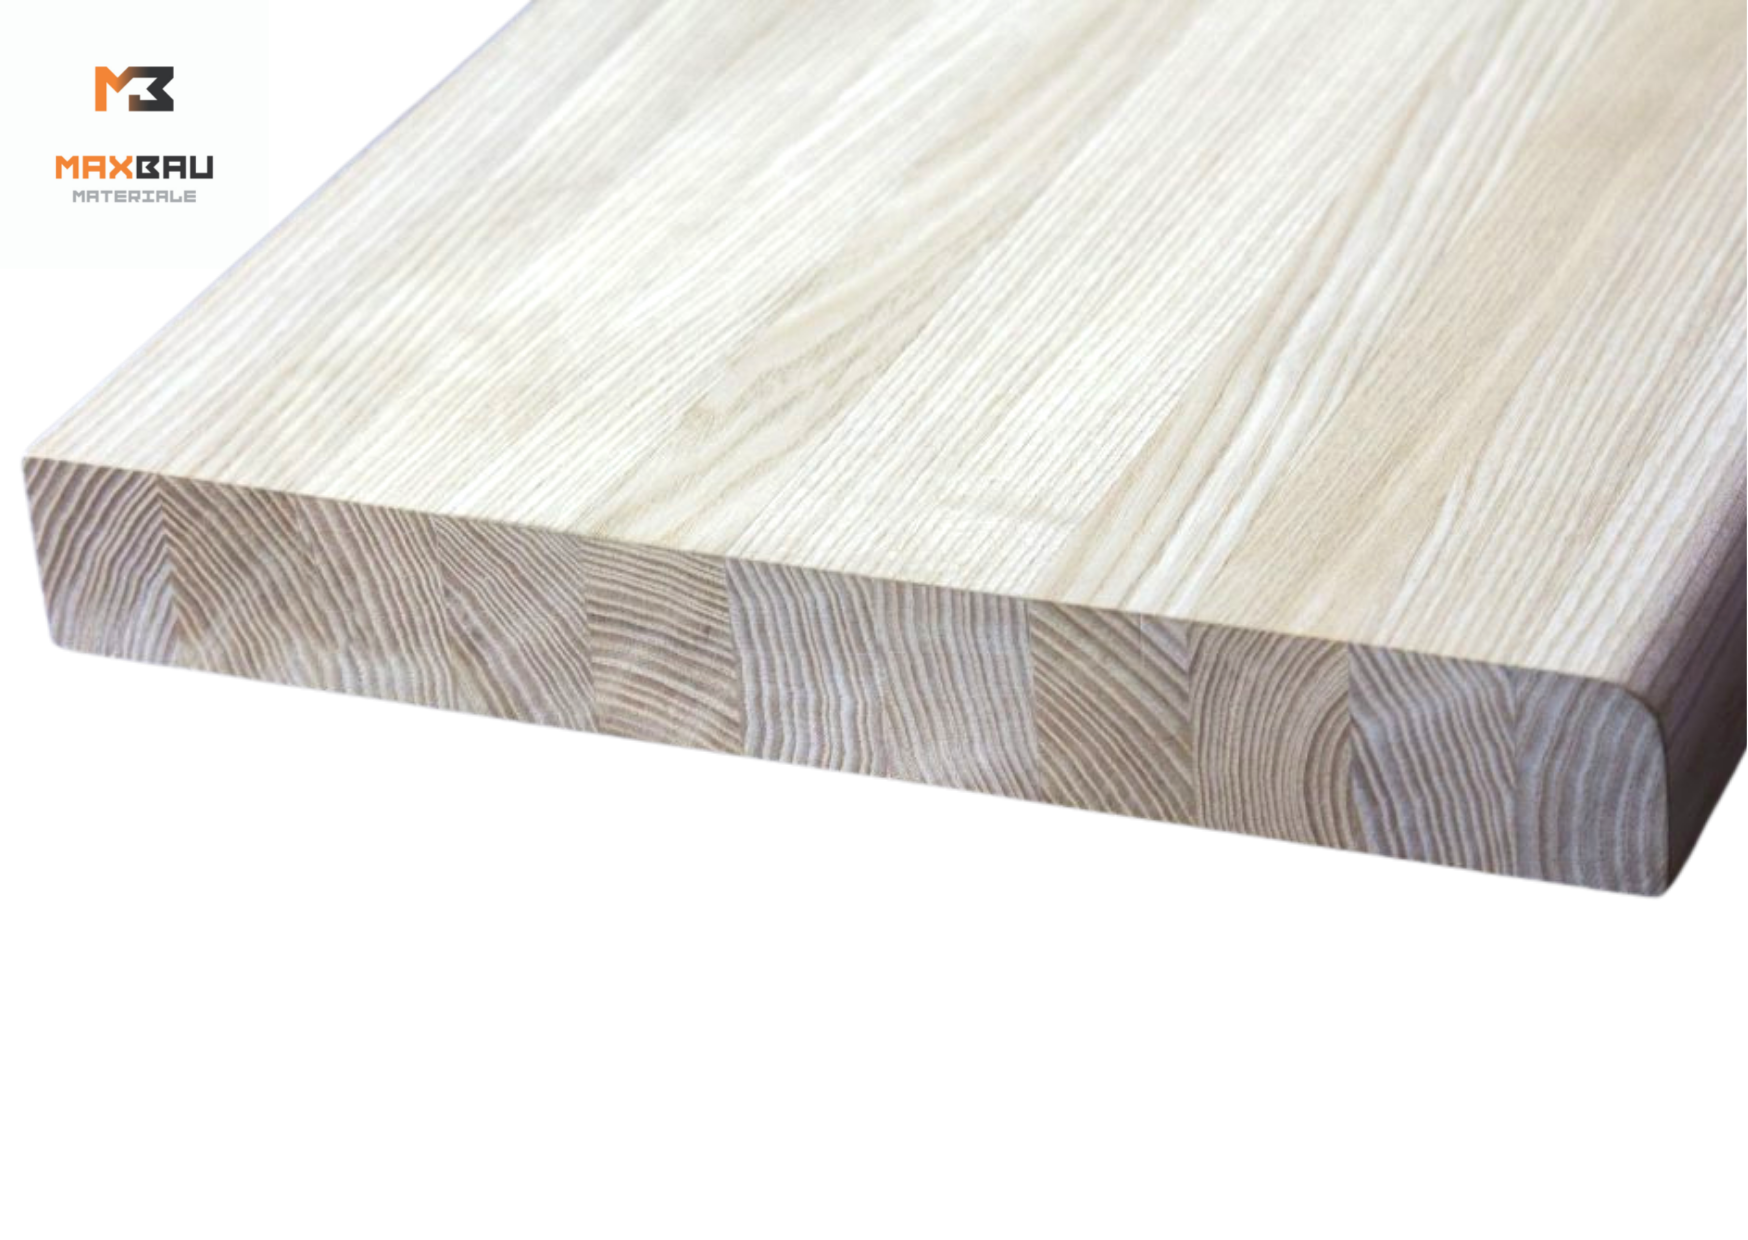 Placi din lemn incleiat - Placa de lemn incleiat MaxBau 800 x 400 x 28 mm Clasa AB, https:maxbau.ro